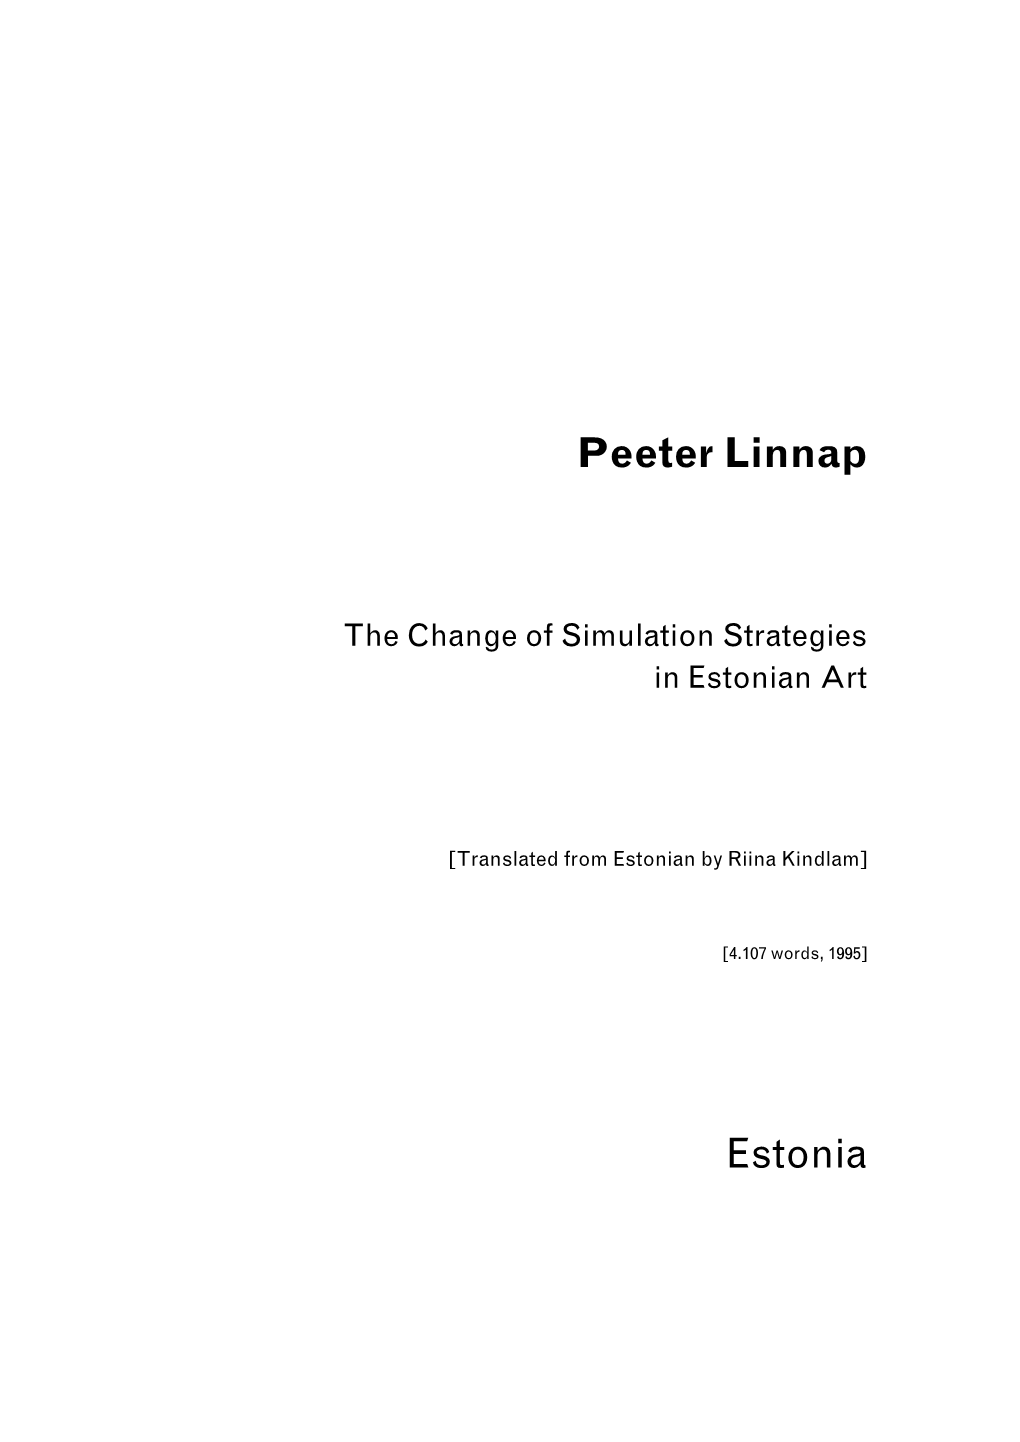 Peeter Linnap the Change of Simulation Strategies in Estonian Art